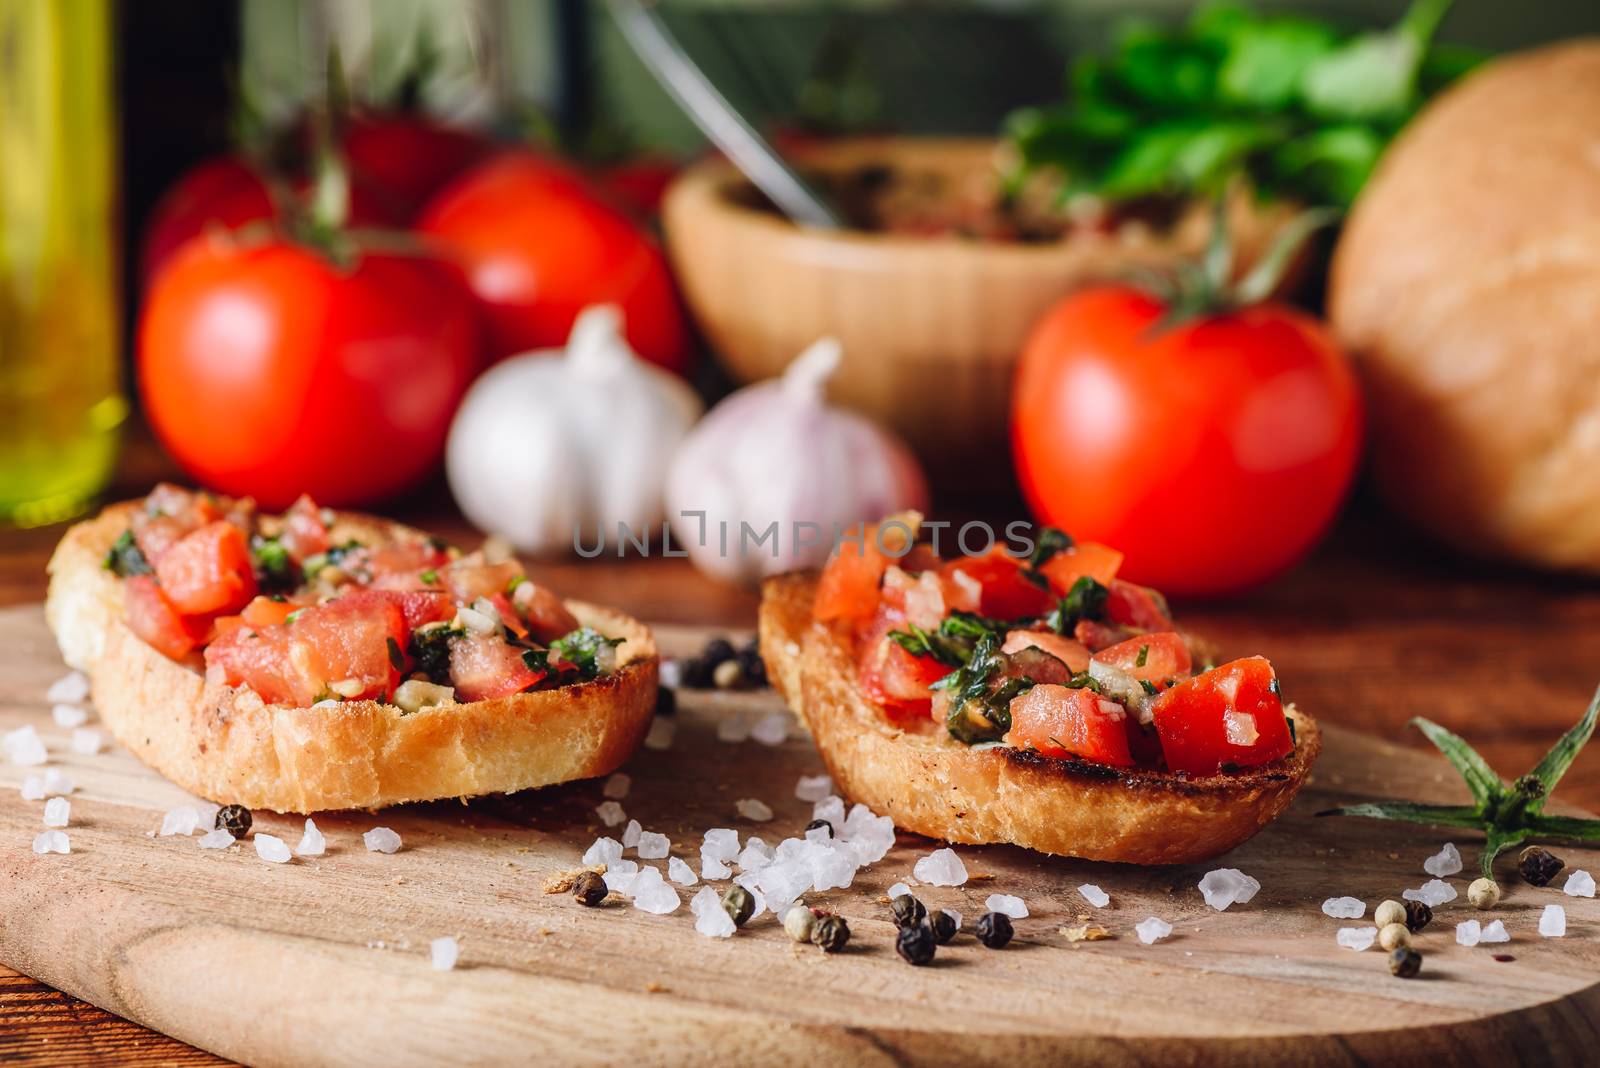 Classic Bruschettas with Tomatoes by Seva_blsv